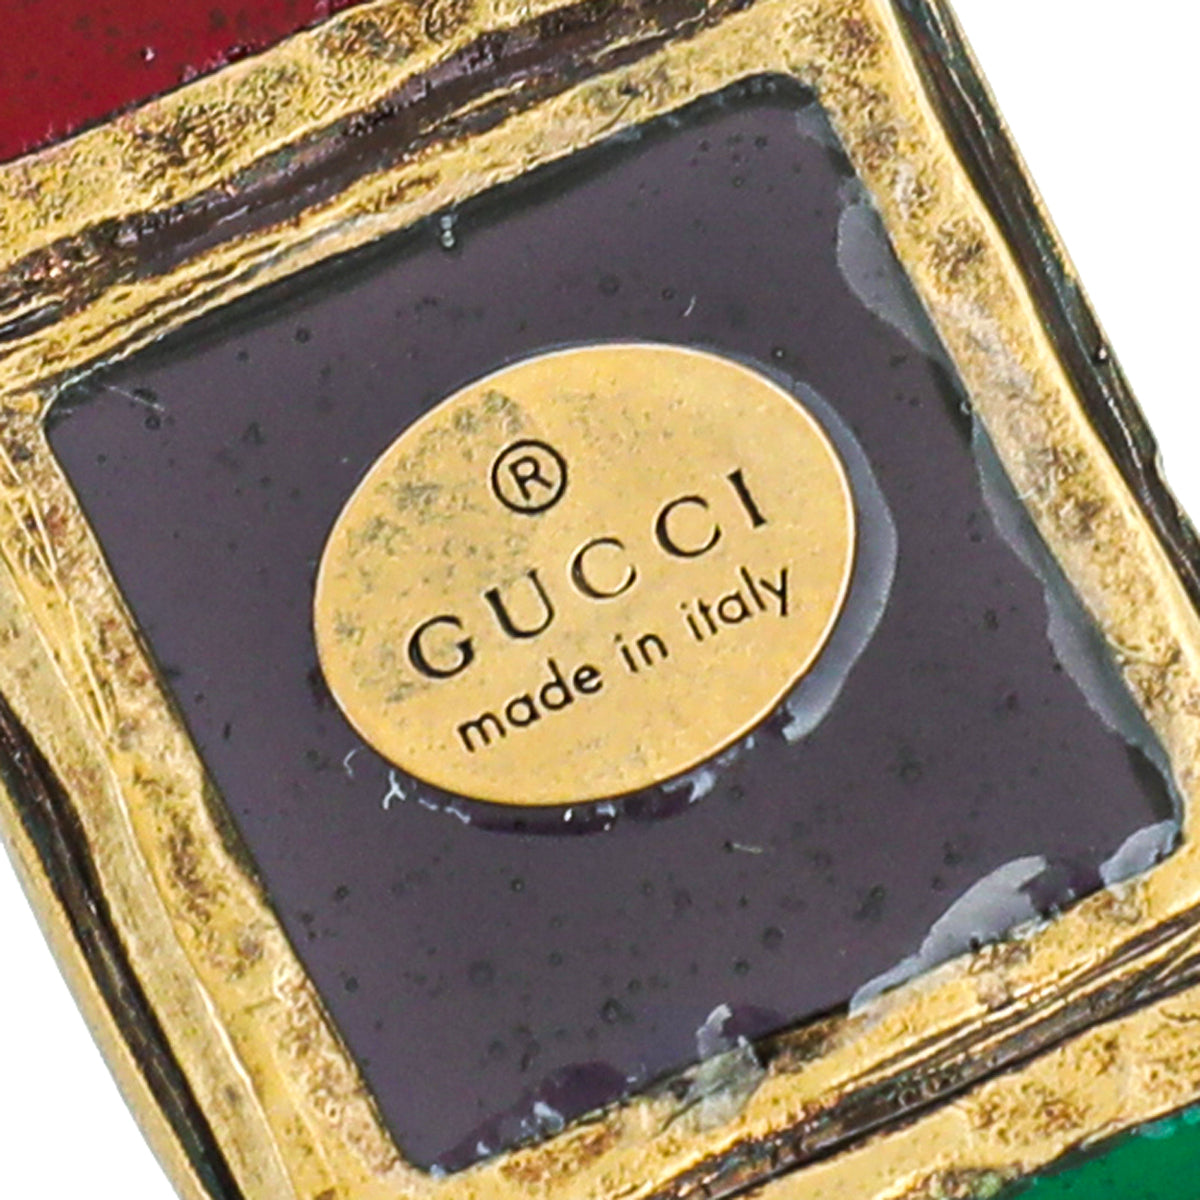 Gucci Multicolor Resin Gripoix Cross Large Pendant Necklace